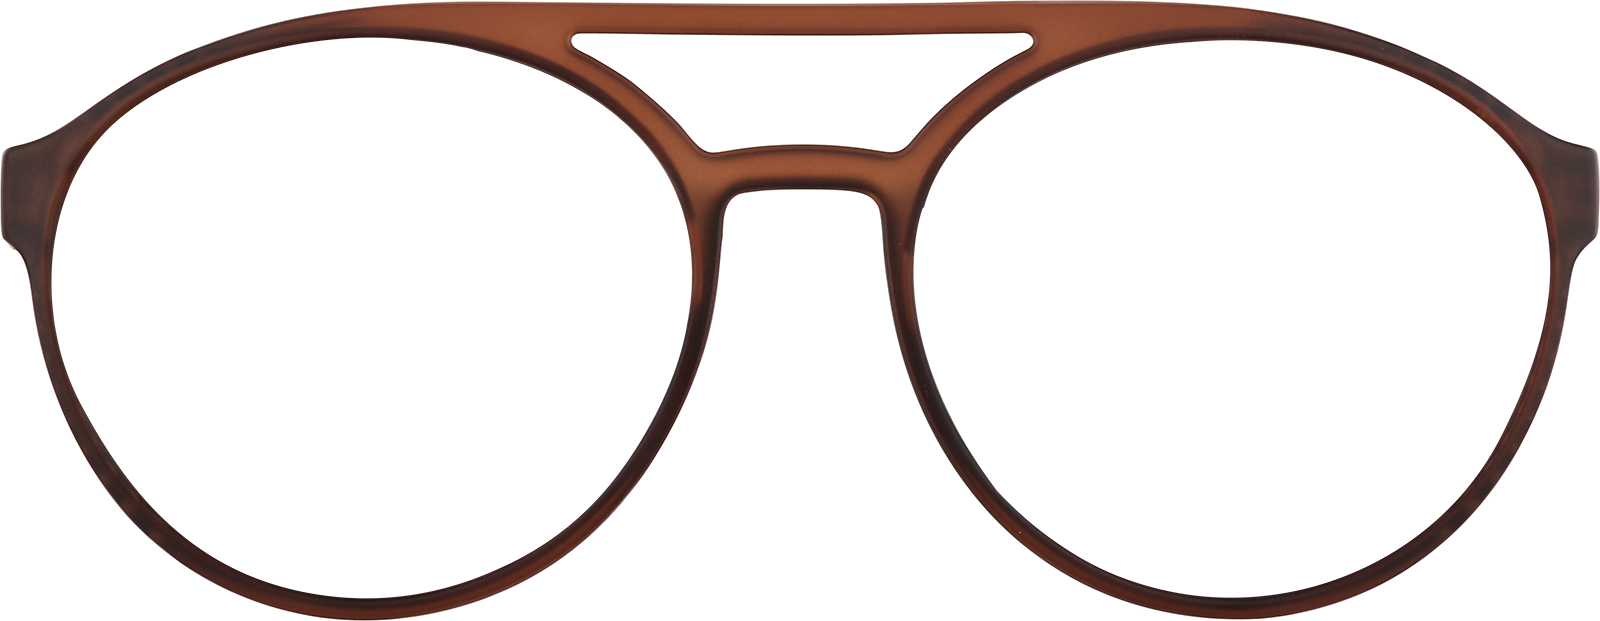 Premium Aviator Sunglasseslens frame image